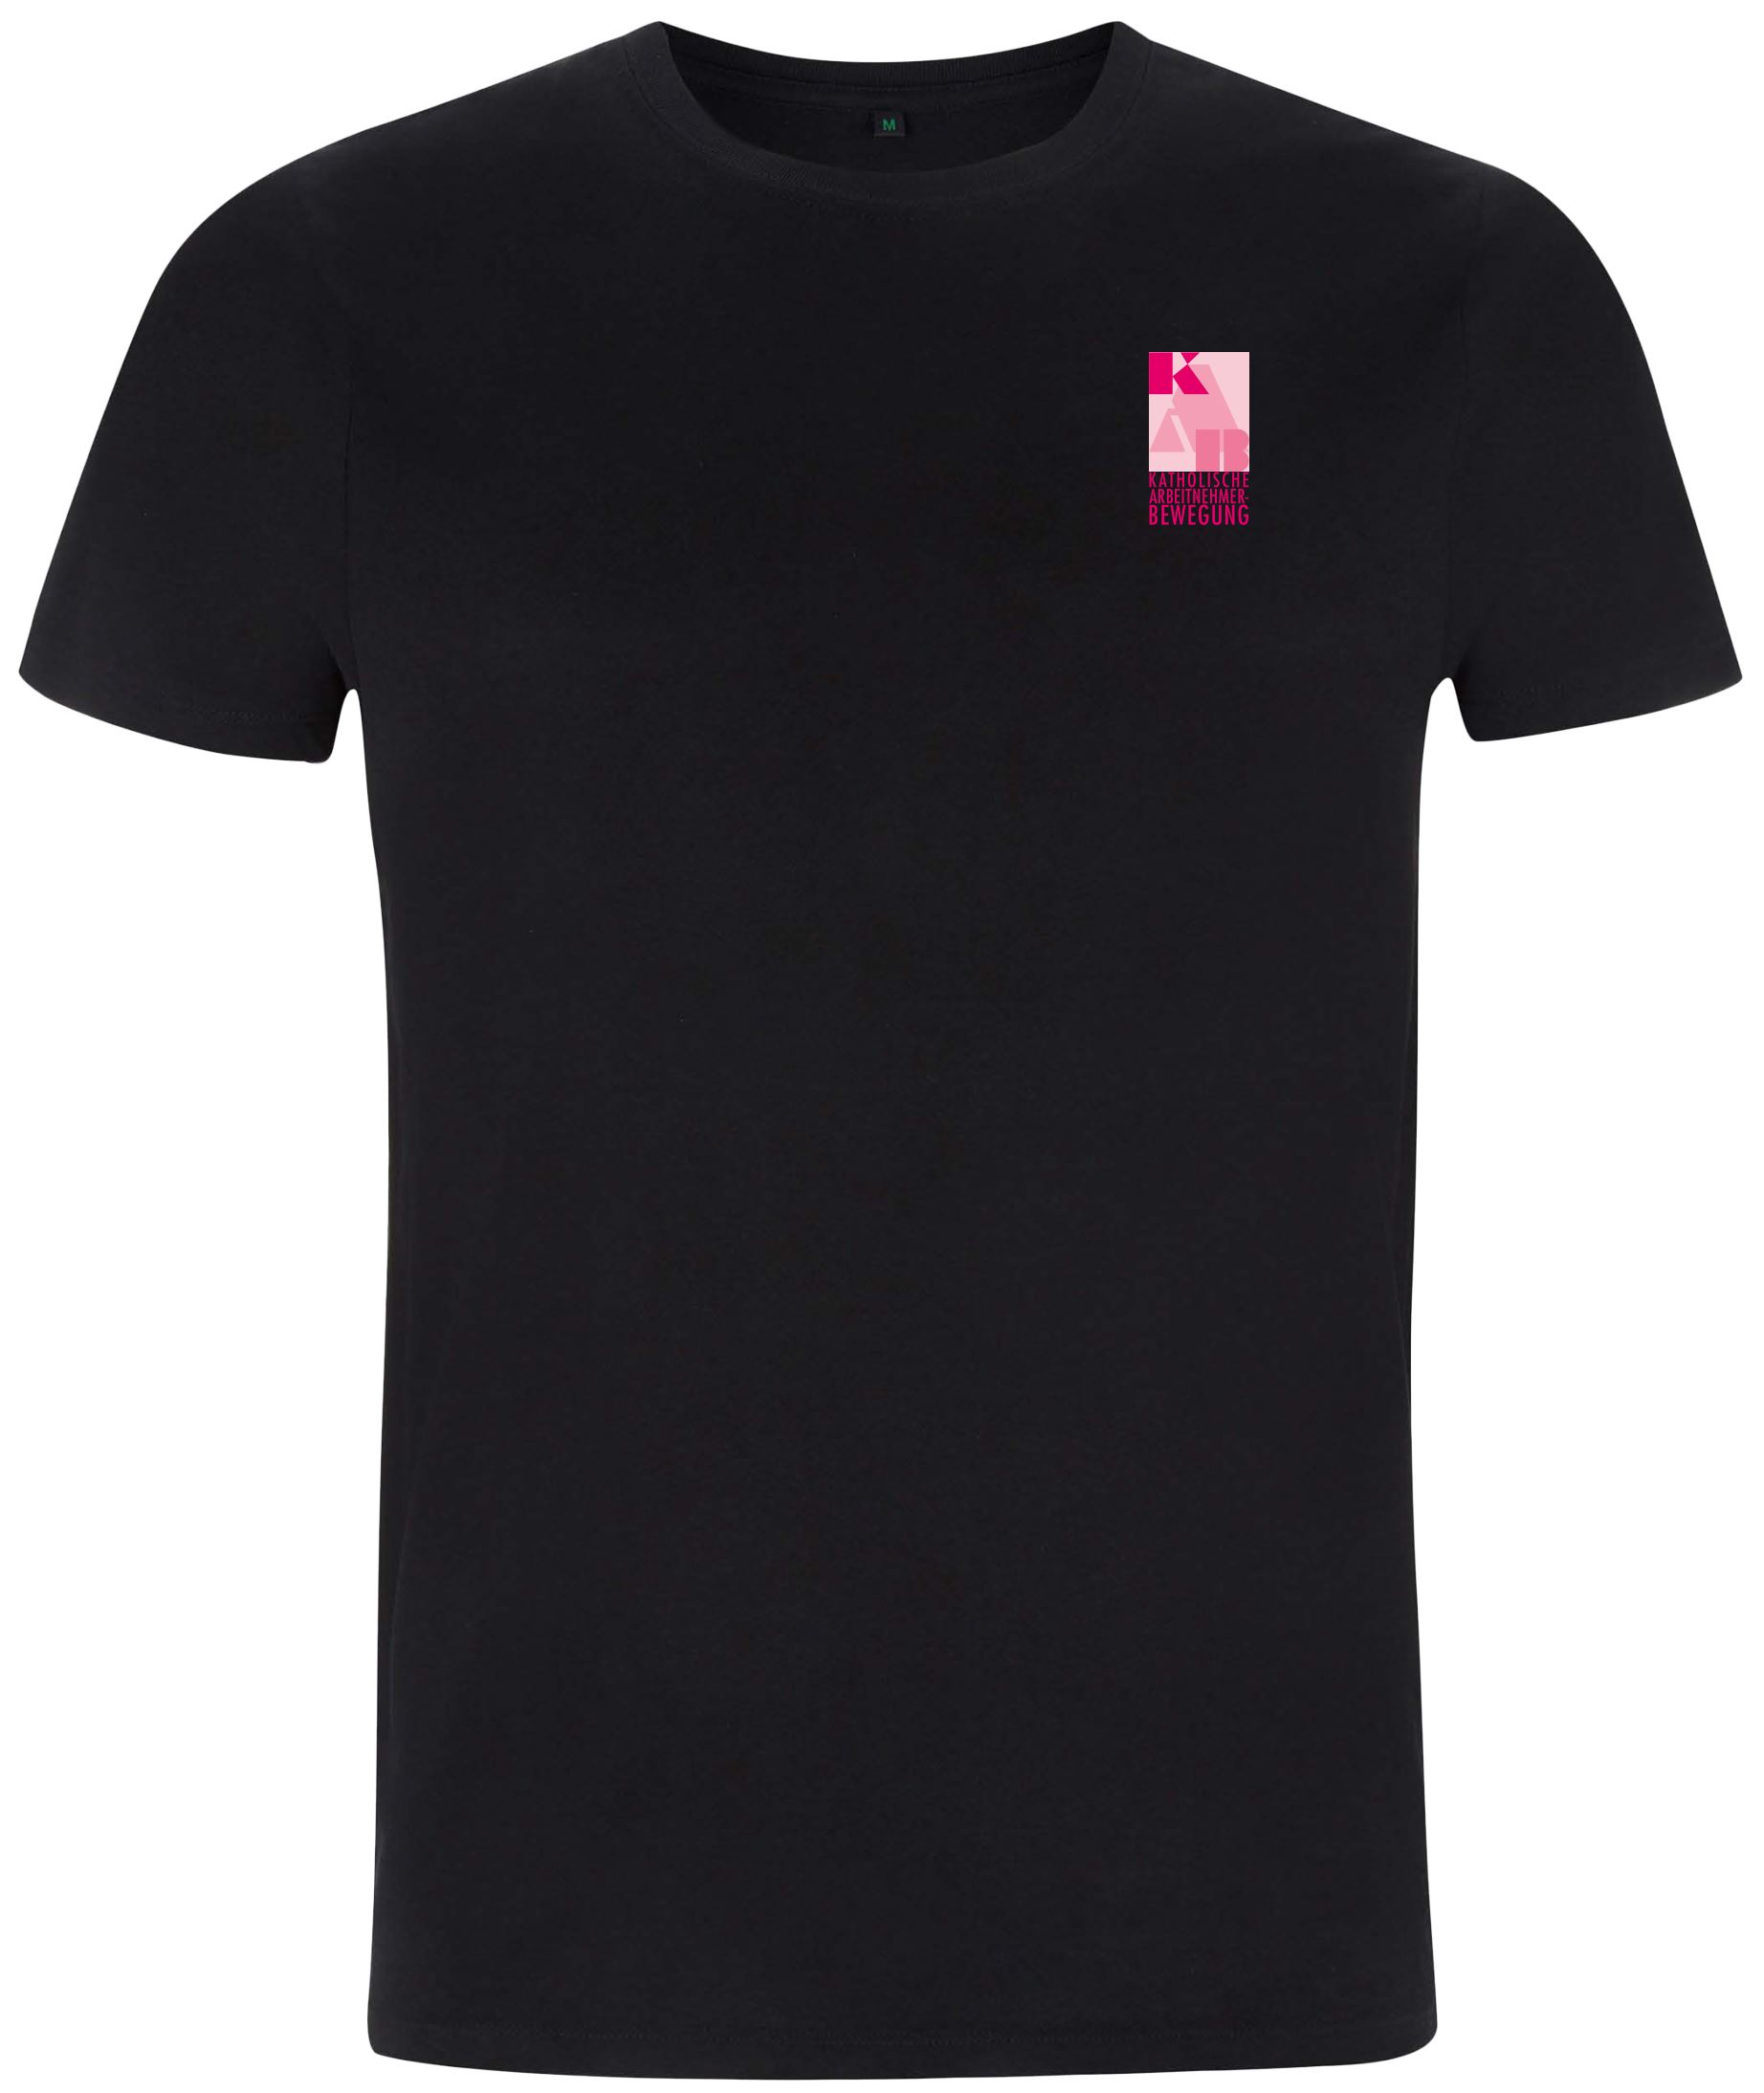 KAB T-Shirt schwarz mit Kampagnenmotiv Gr. XS